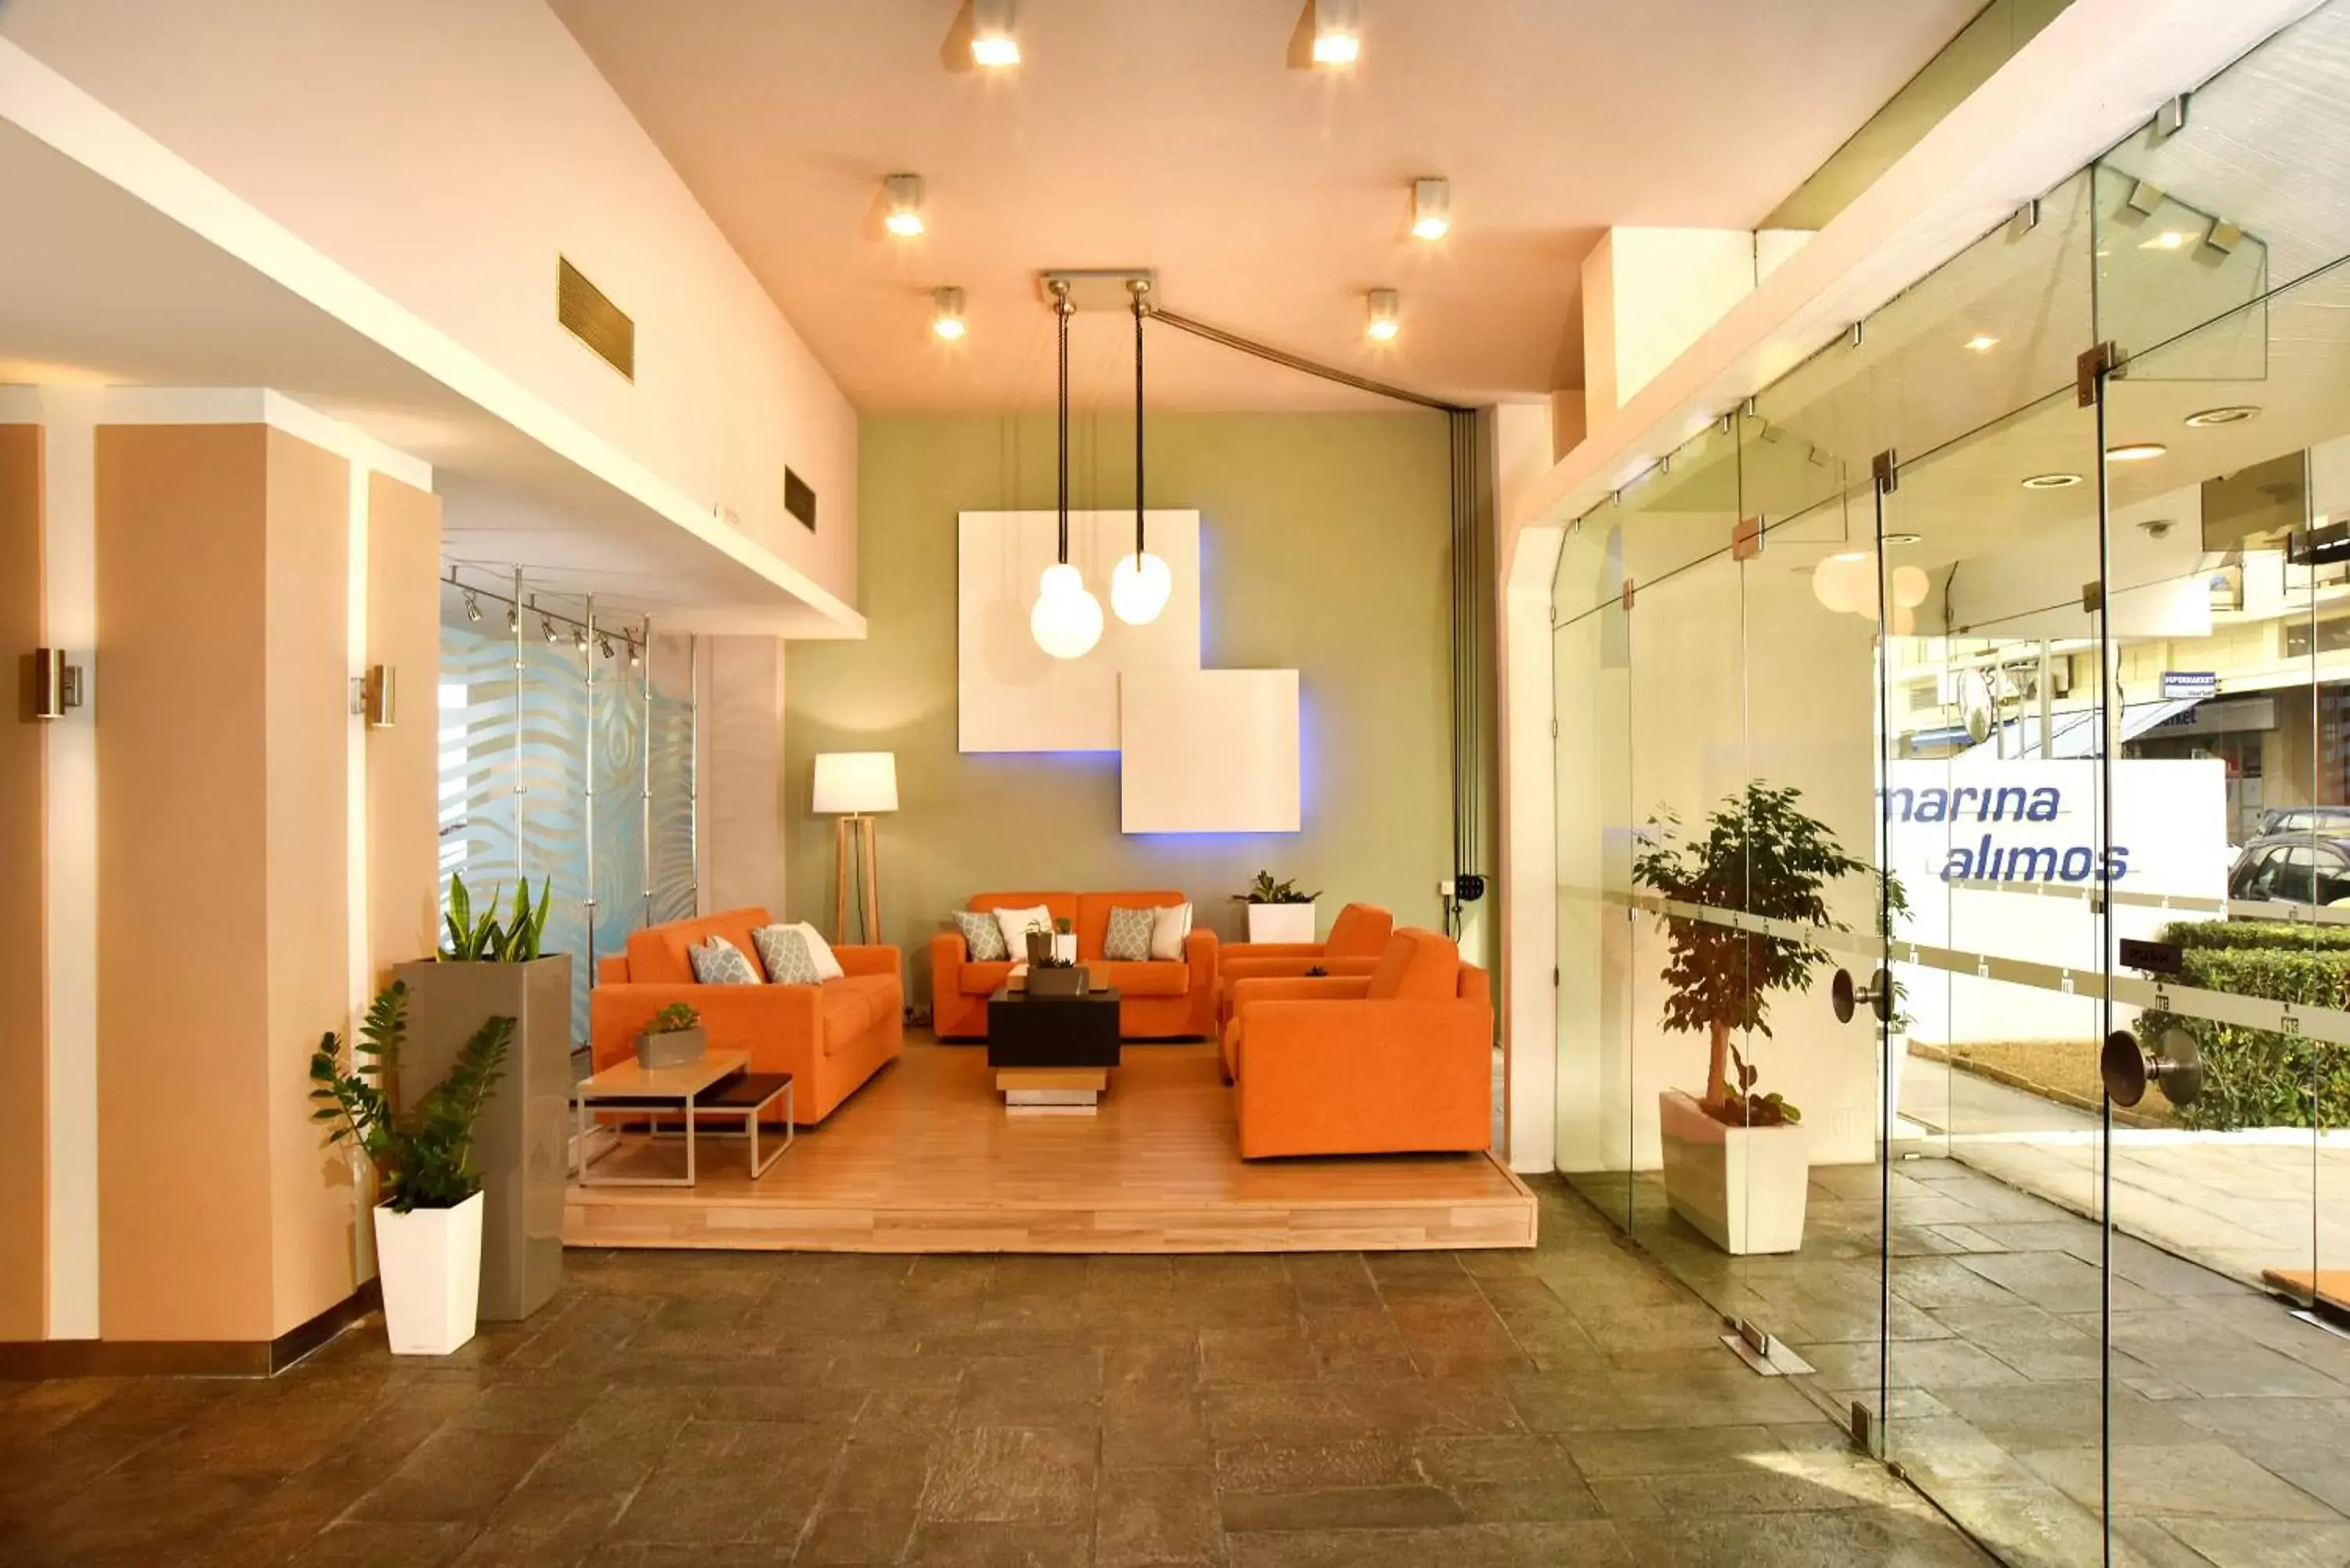 Lobby or reception, Lobby/Reception in Marina Alimos Hotel Apartments